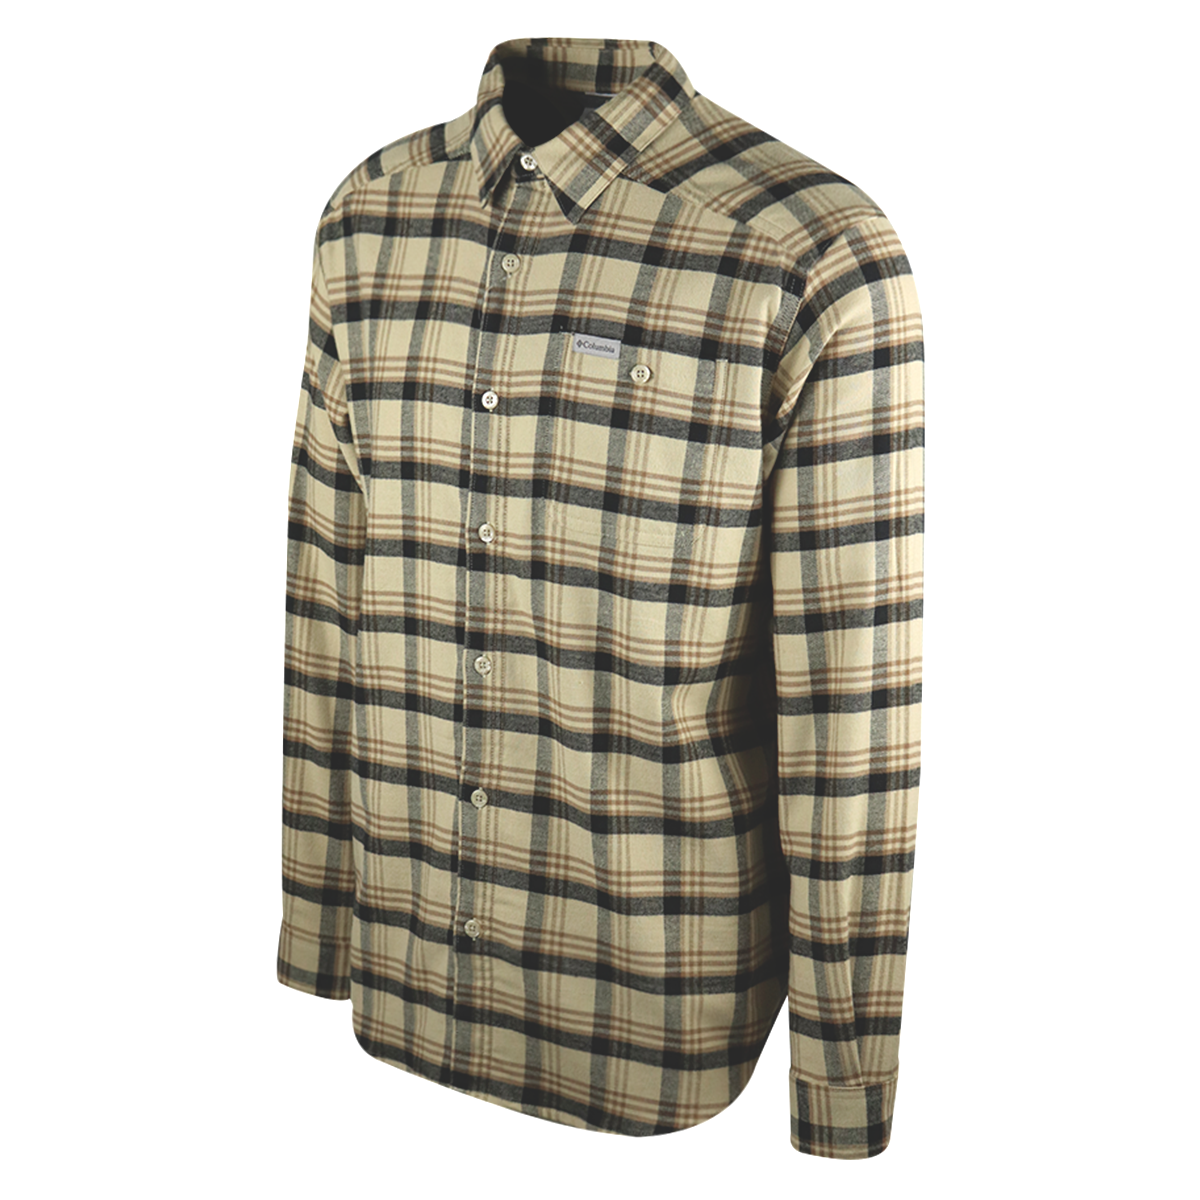 Columbia Men's Beige Brown Black Plaid Cornell Woods L/S Flannel Shirt (272)